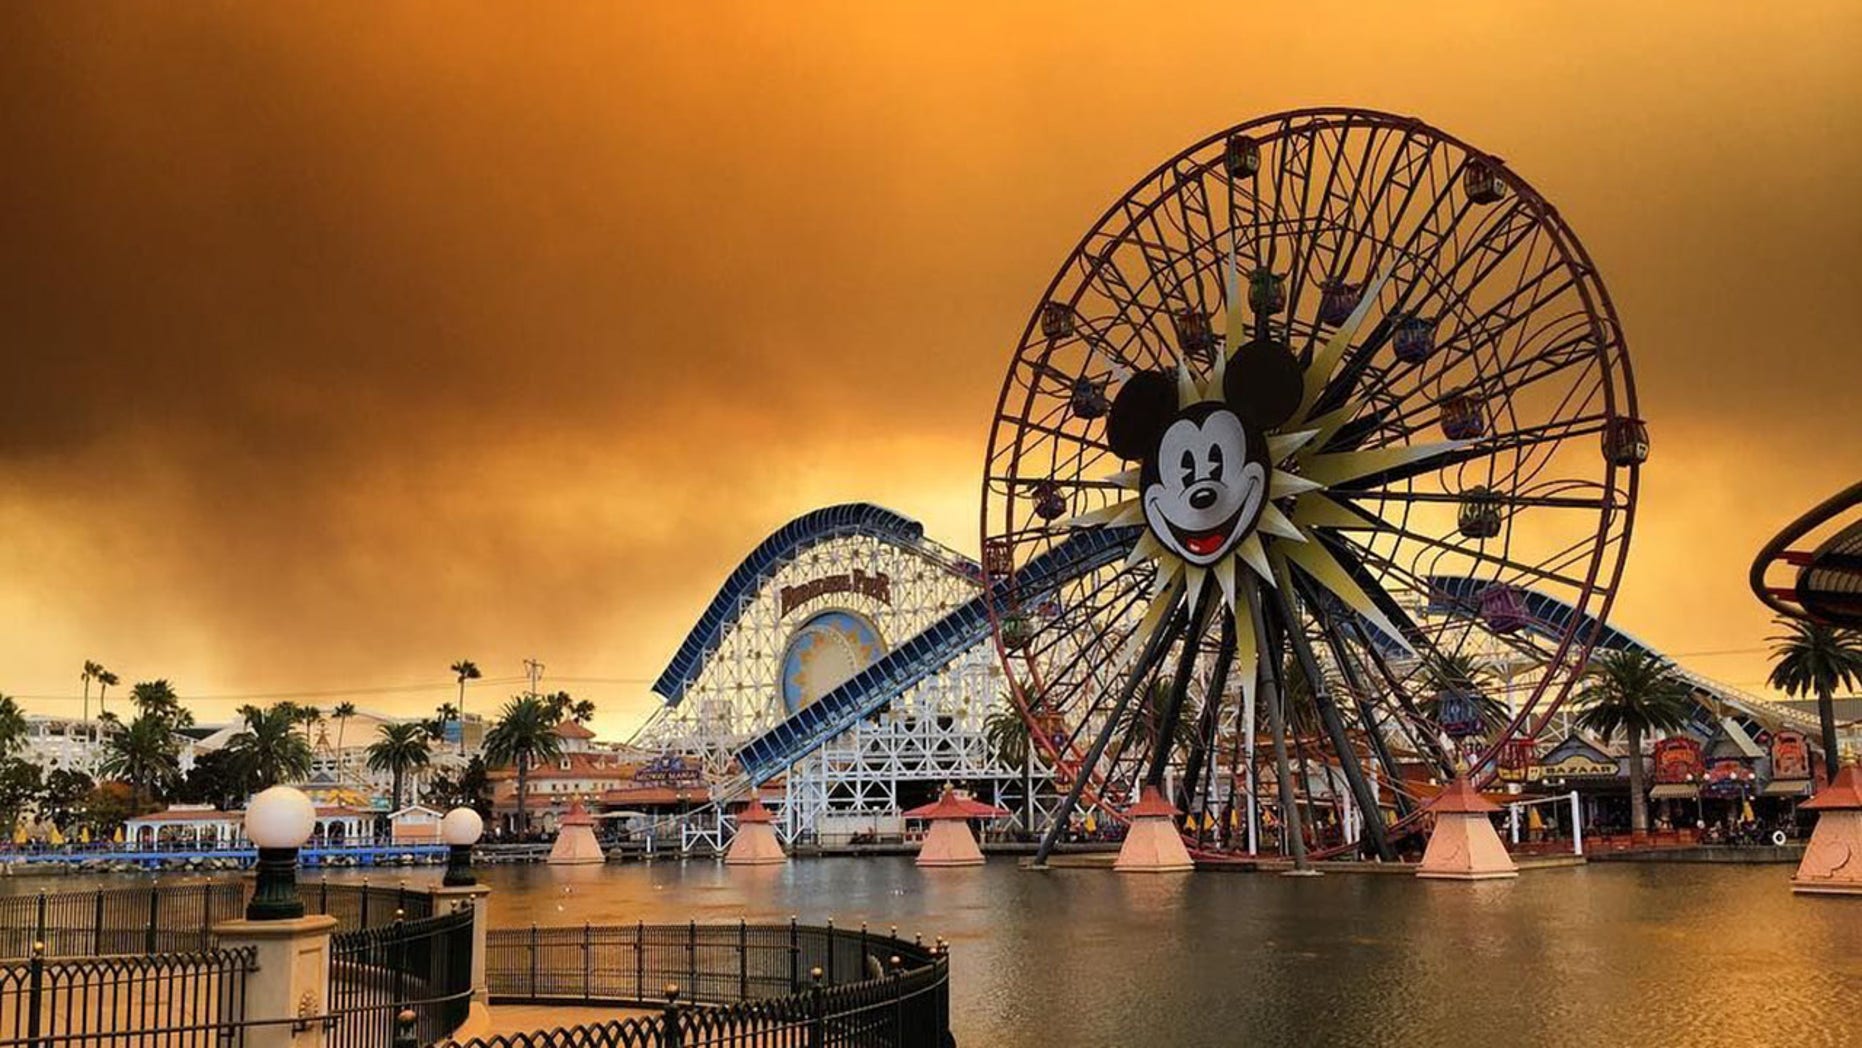 Southern California fire shrouds Disneyland Anaheim in dramatic, smoky